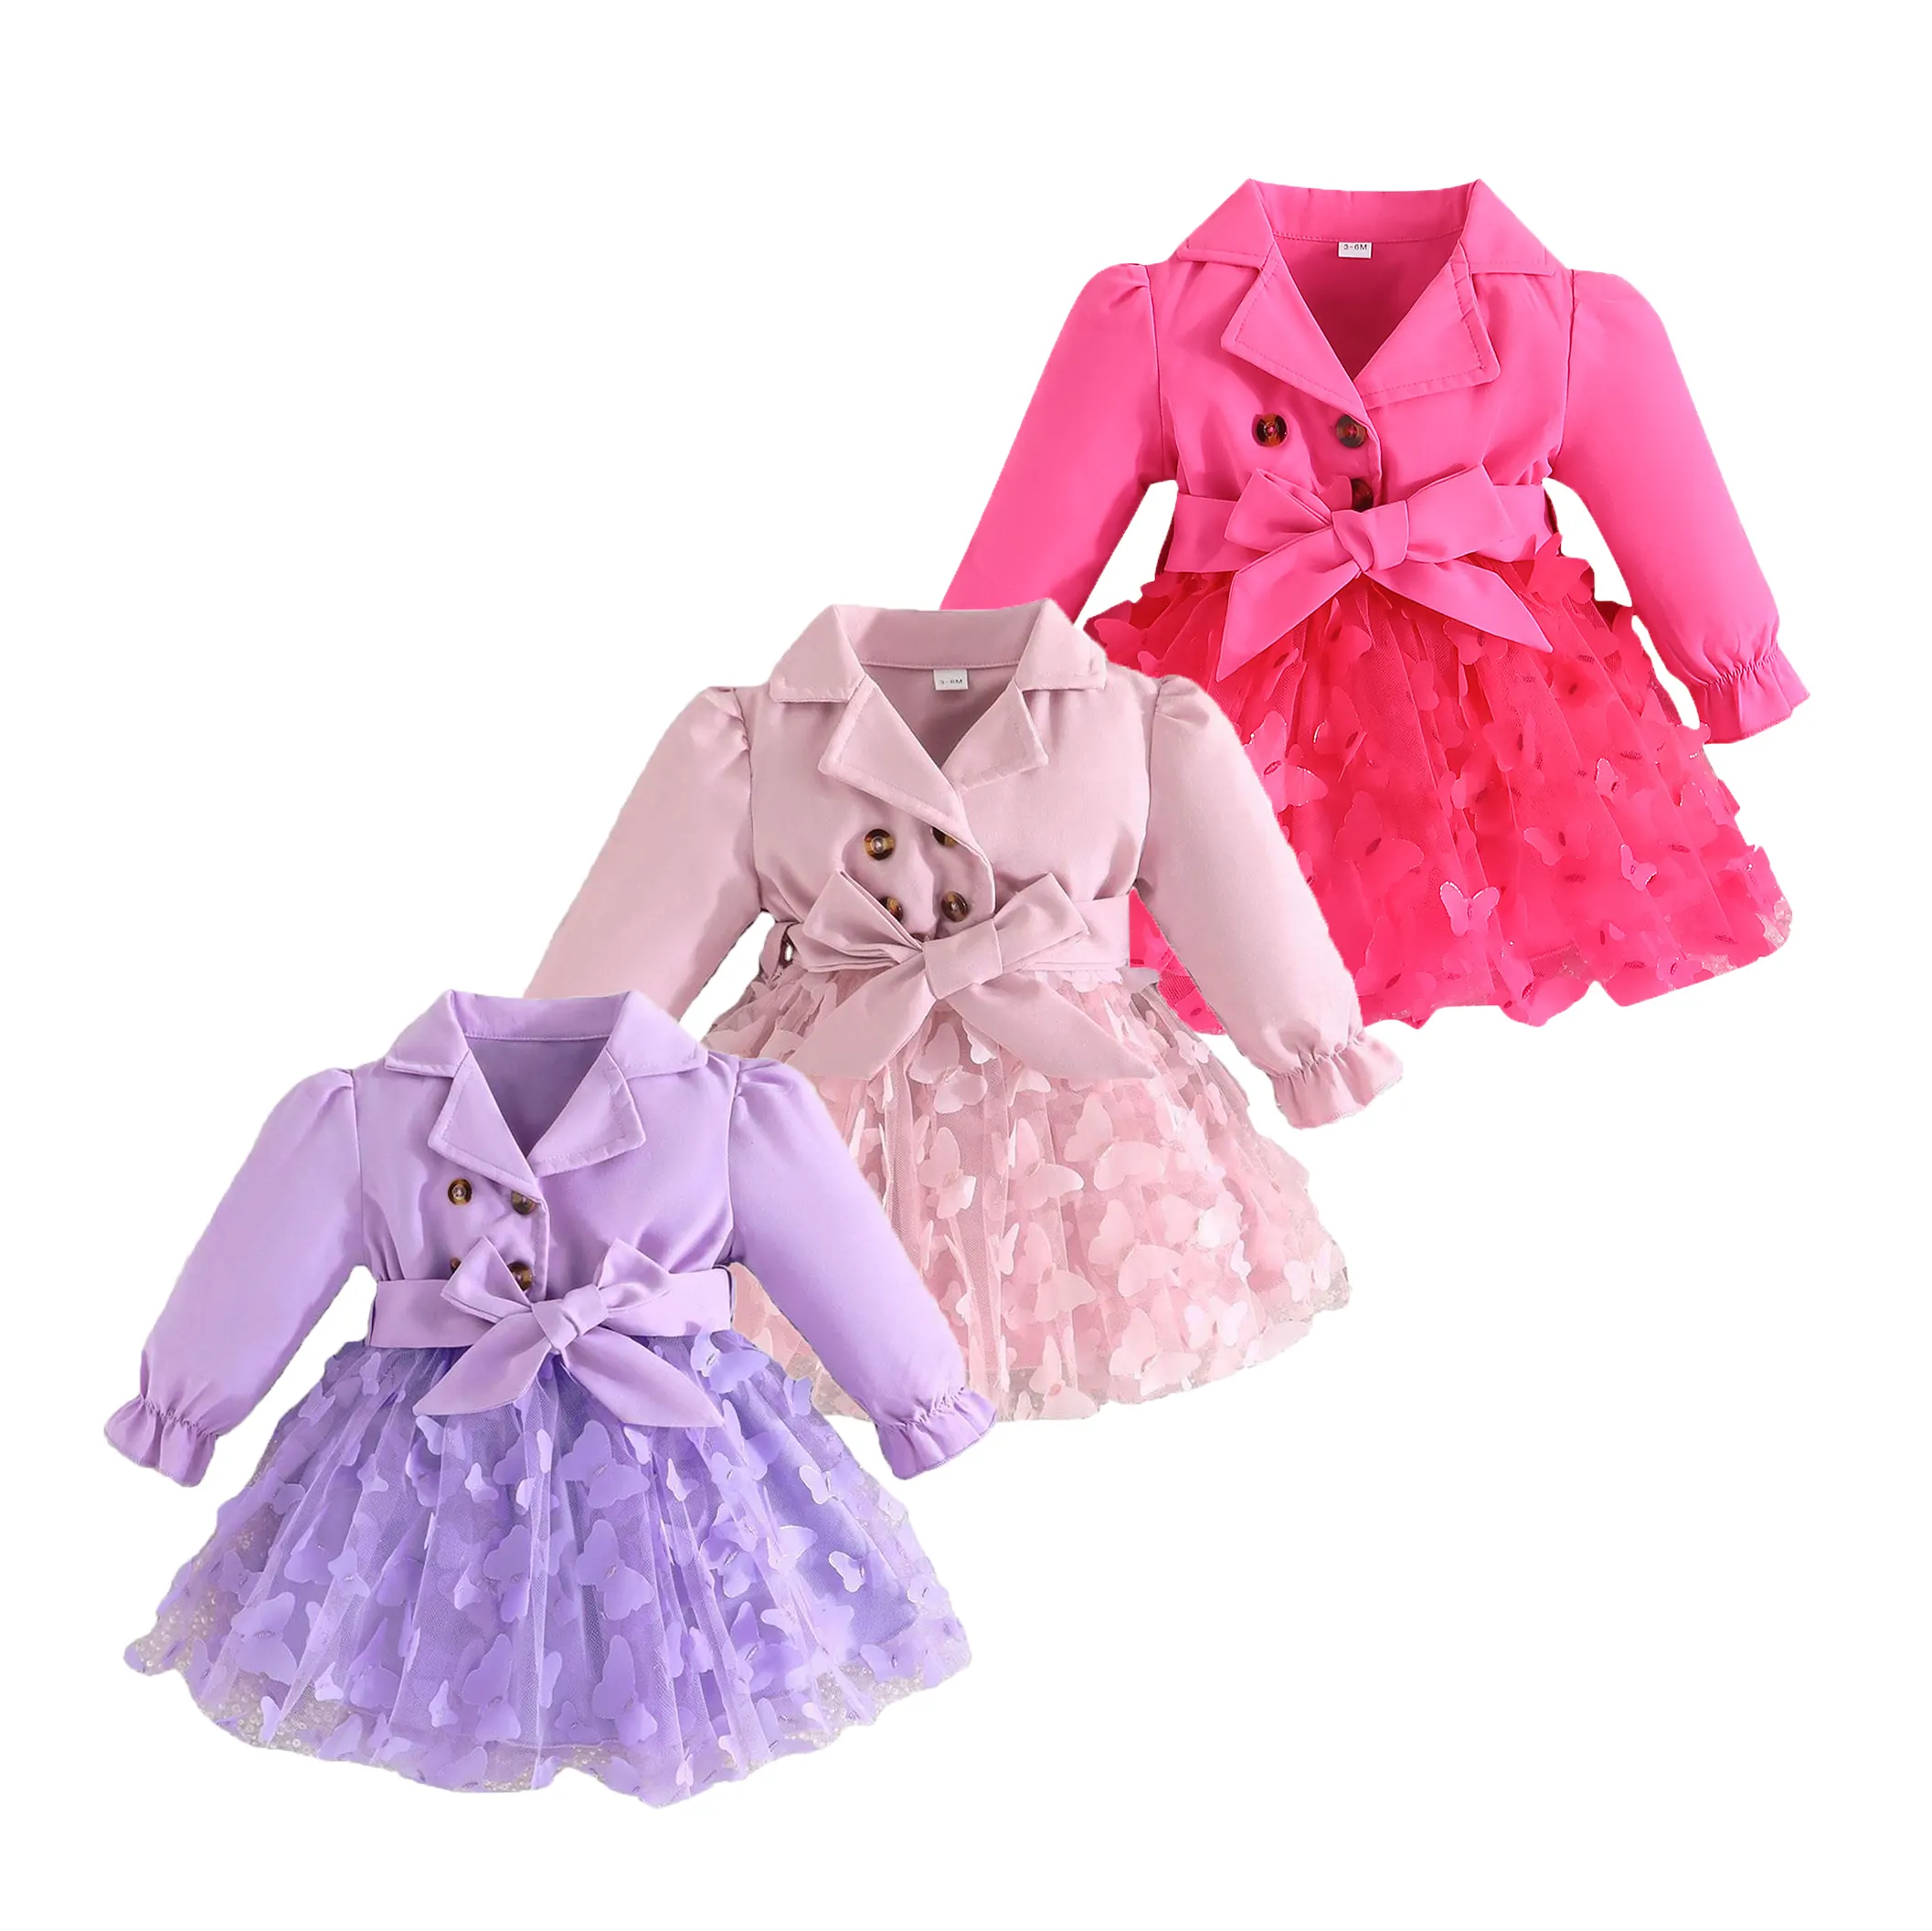 NEU Hot Selling Langarm 3D Schmetterling Mesh Infant Girl Kleid Hot Pink Baby Kleid Herbst Winter Mädchen Kleidung